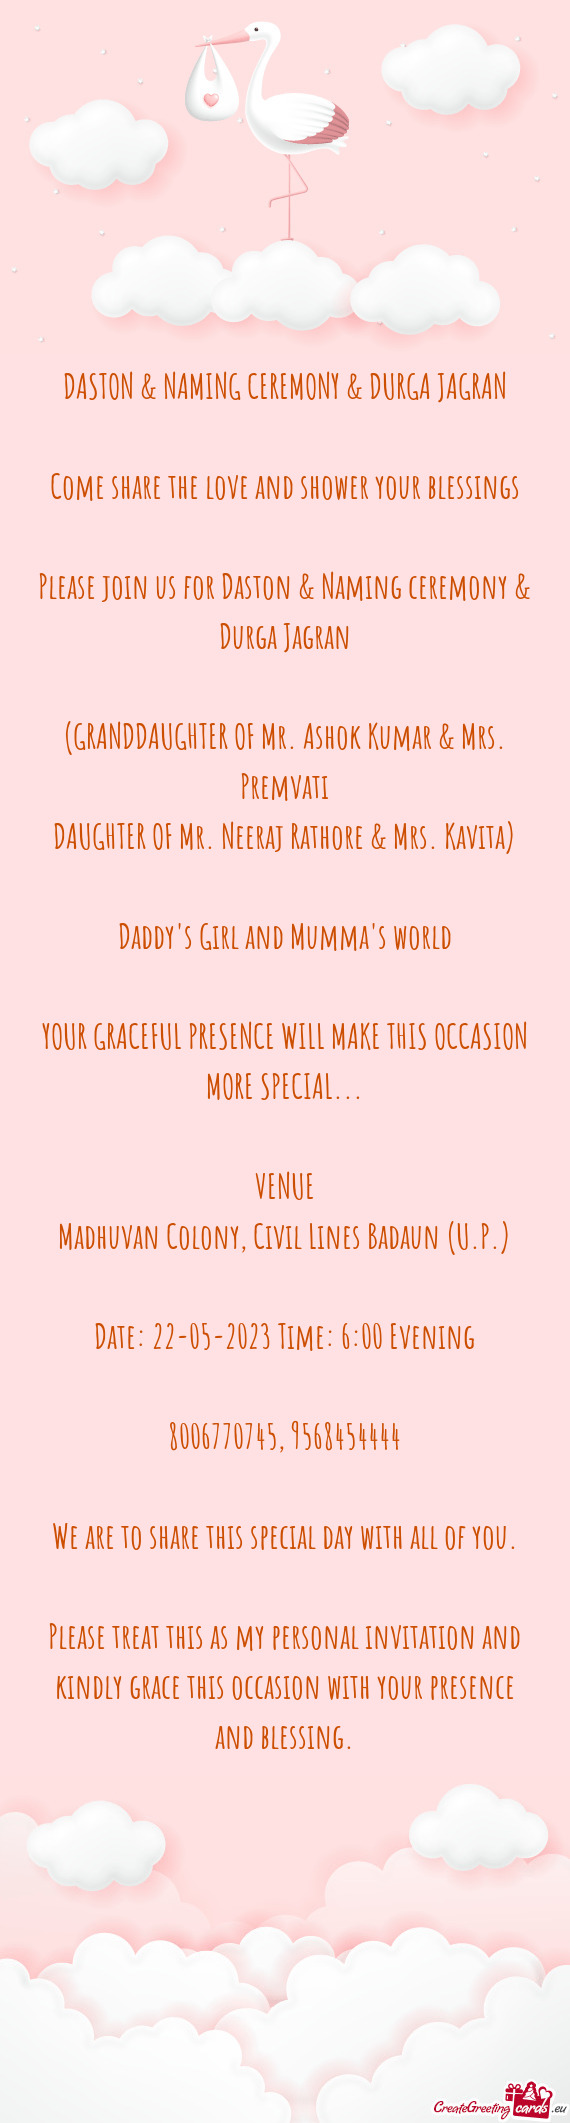 Please join us for Daston & Naming ceremony & Durga Jagran